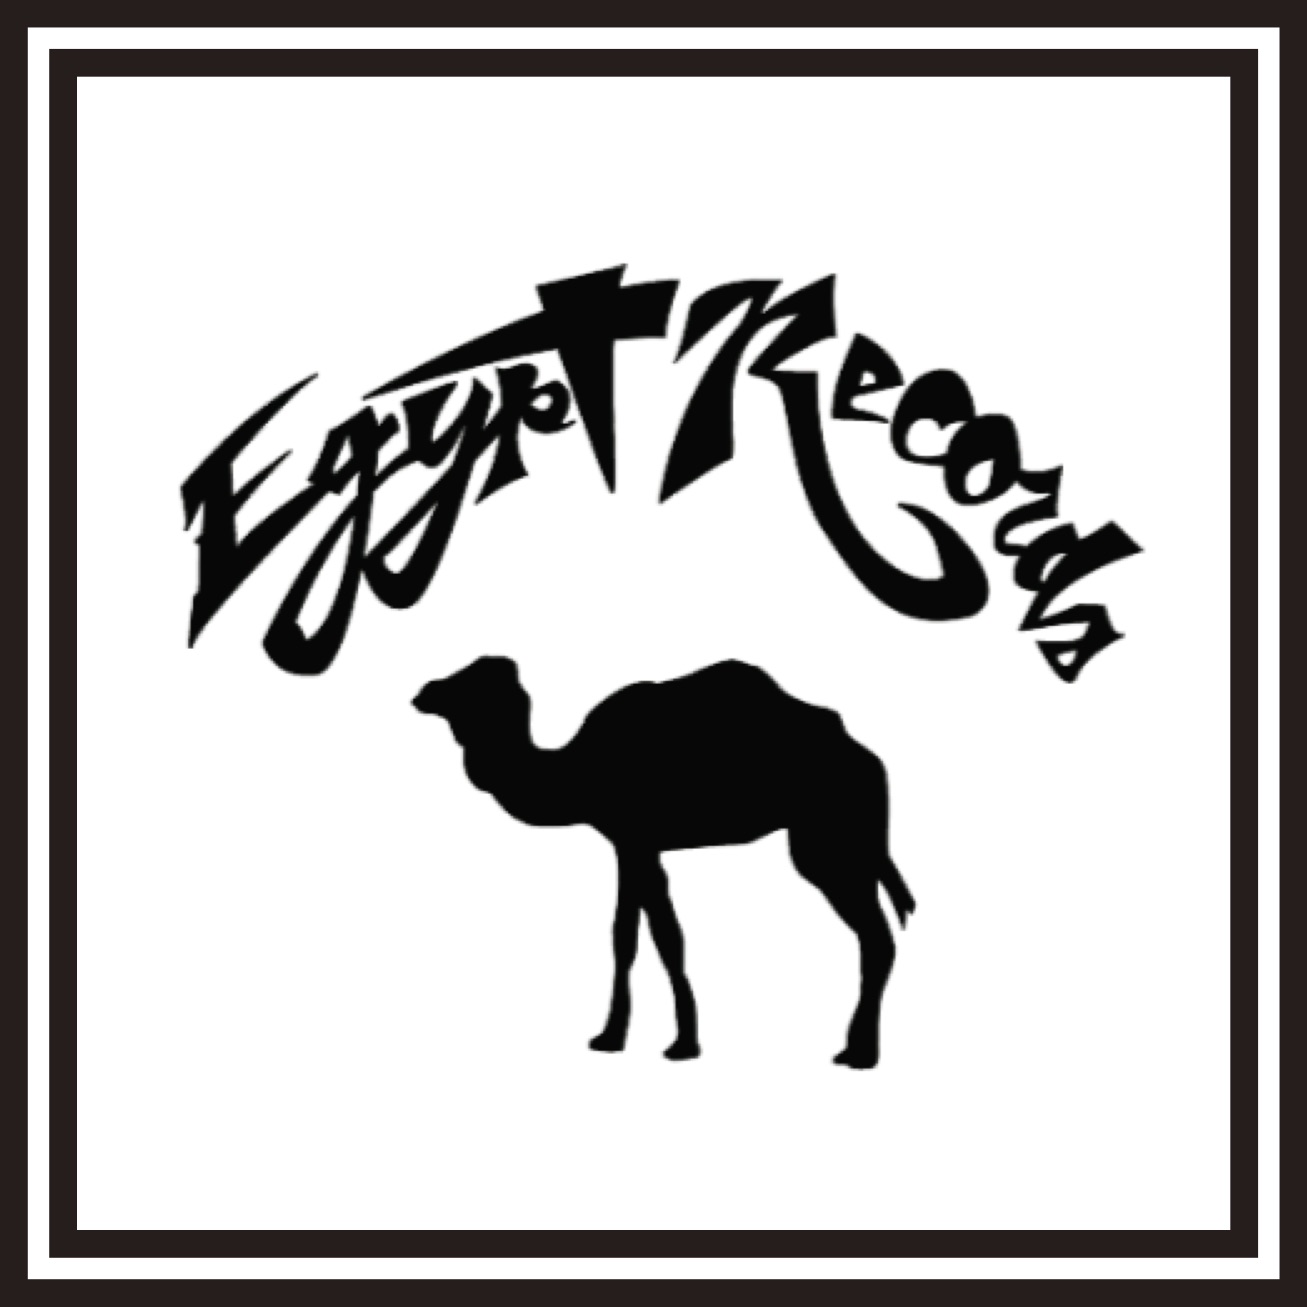 EGYPT RECORDS